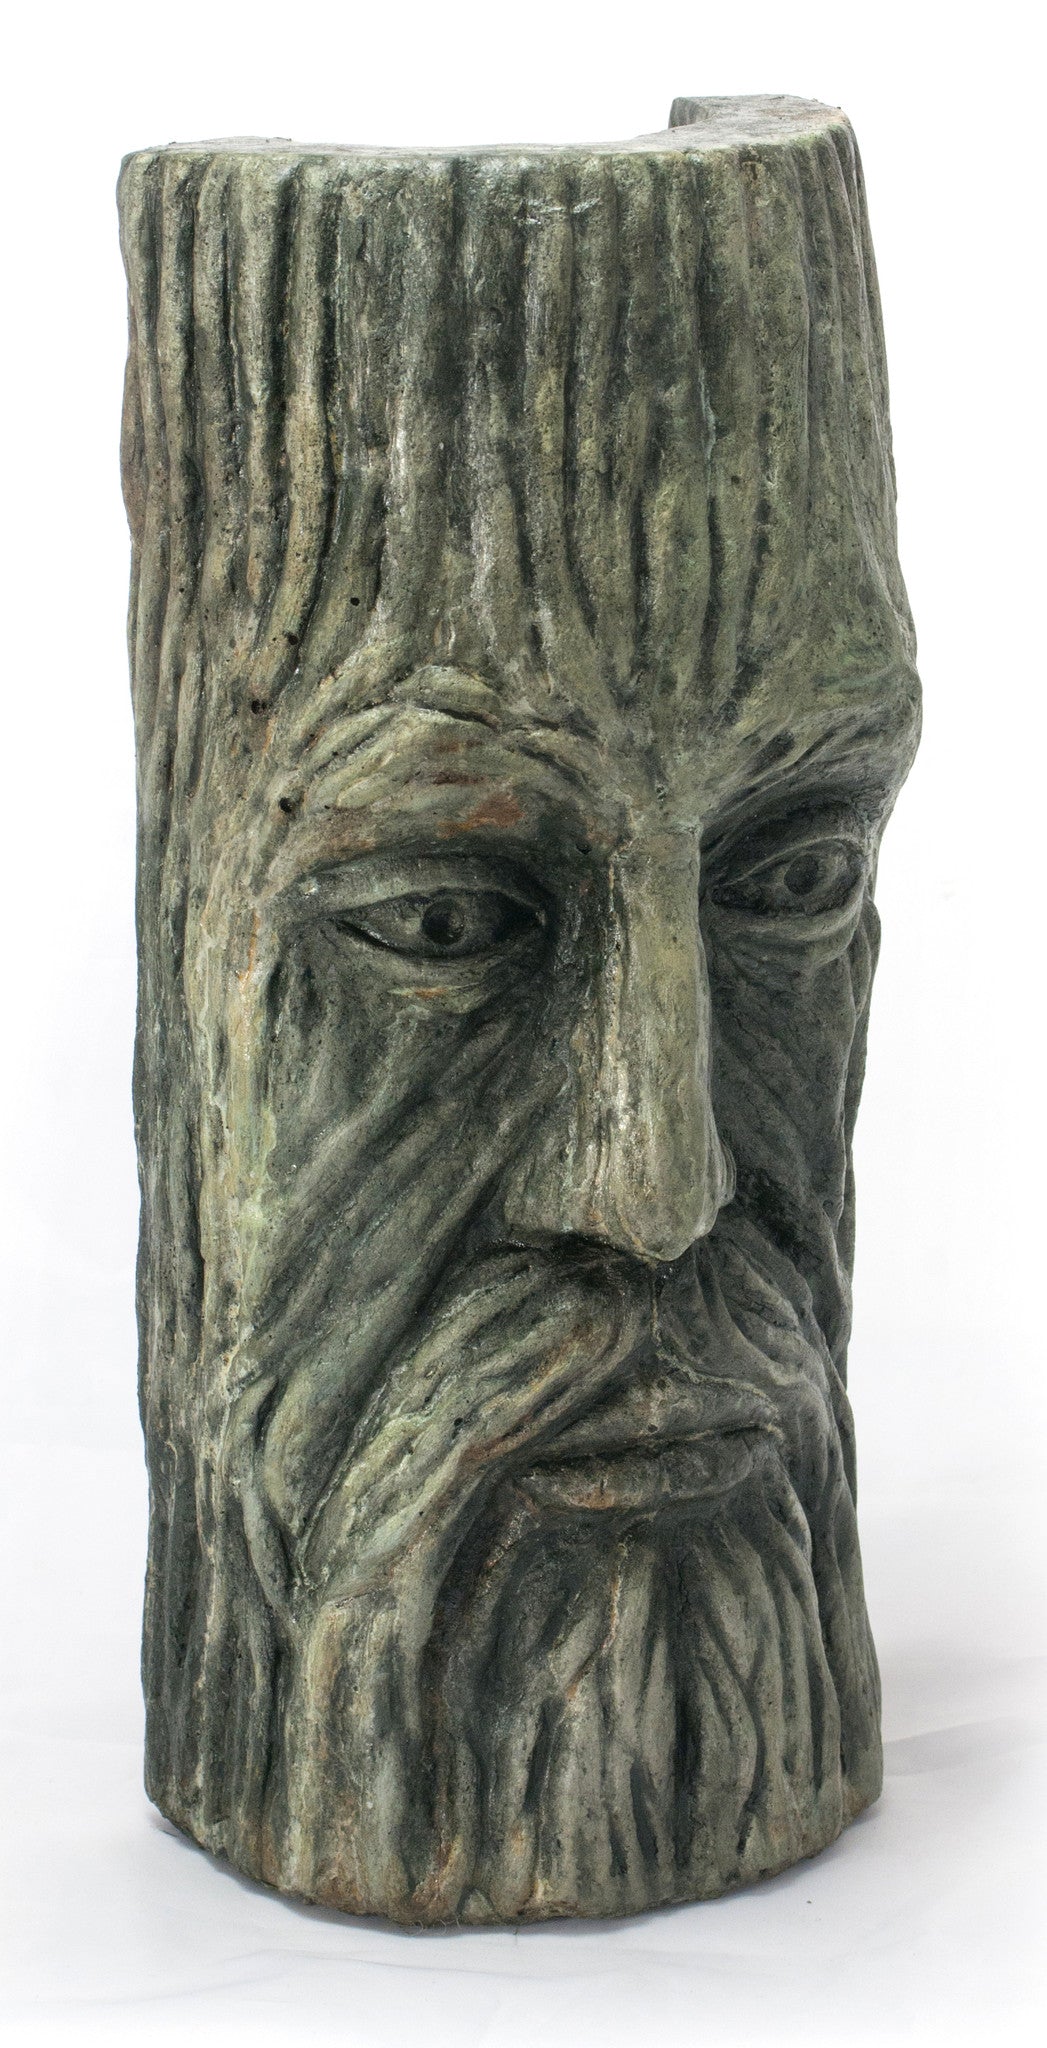 Treeman Mask - Small in Western Slate Finish